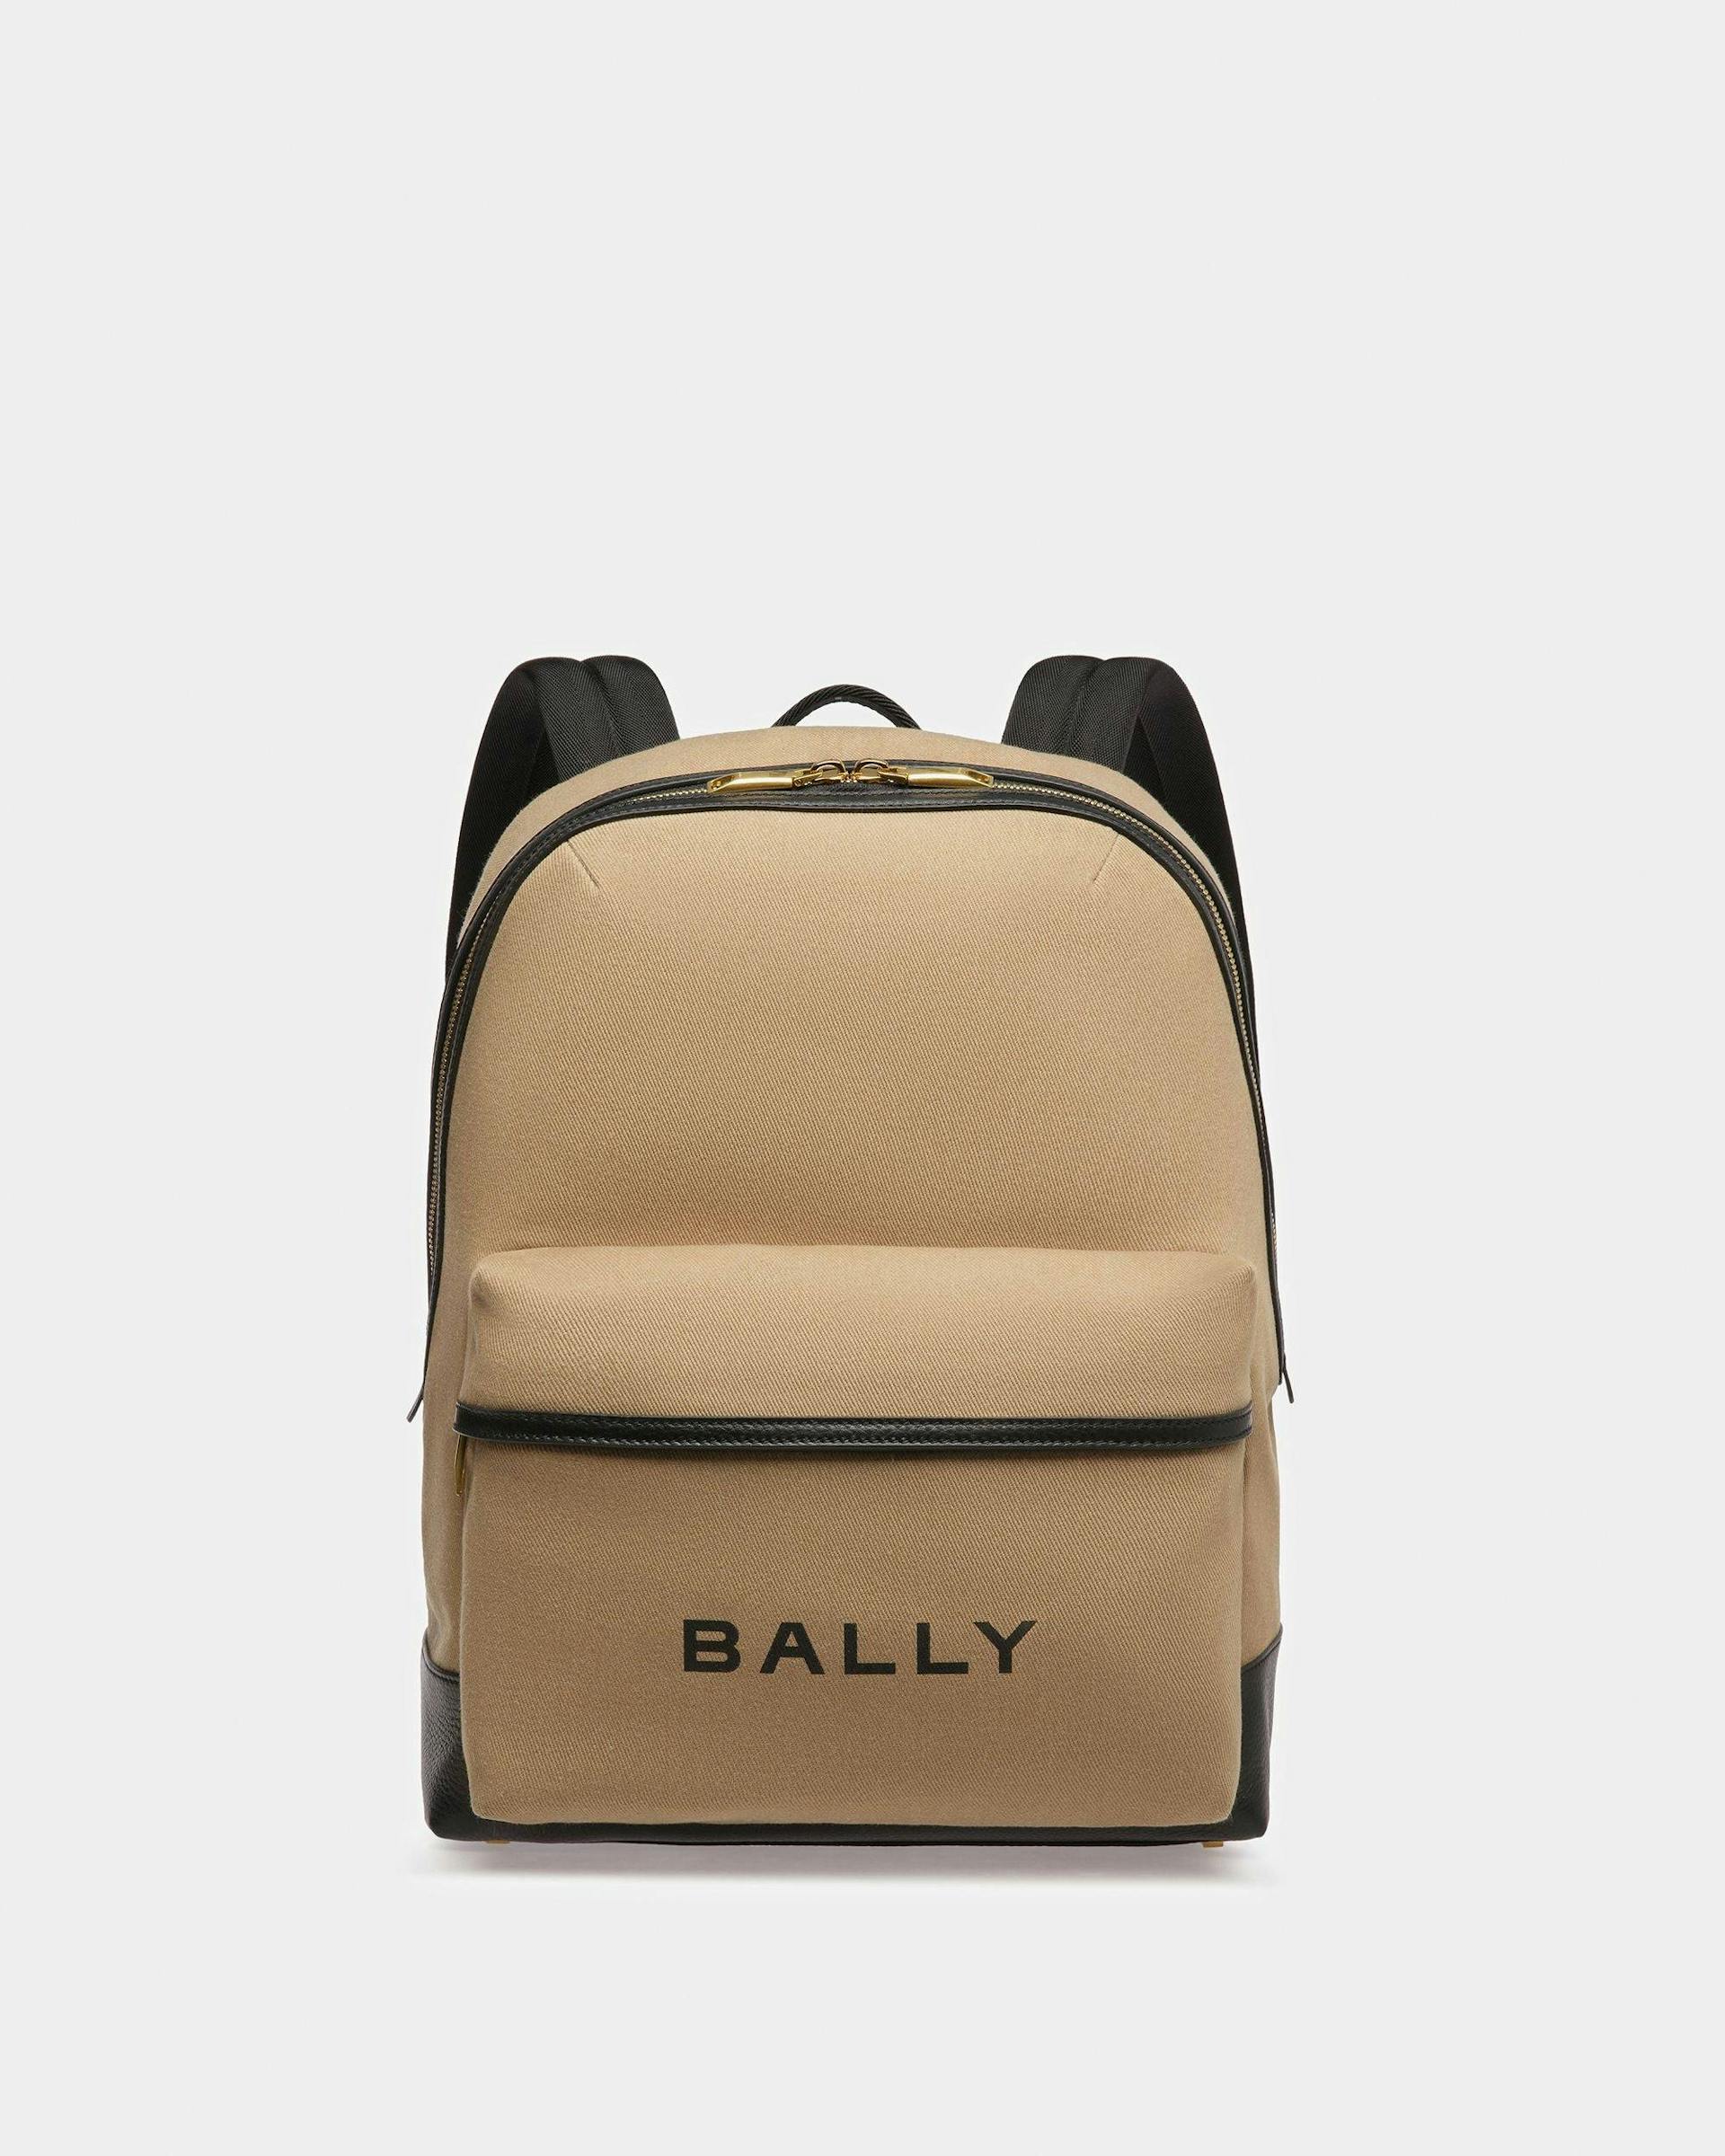 Bar Backpack - Bally